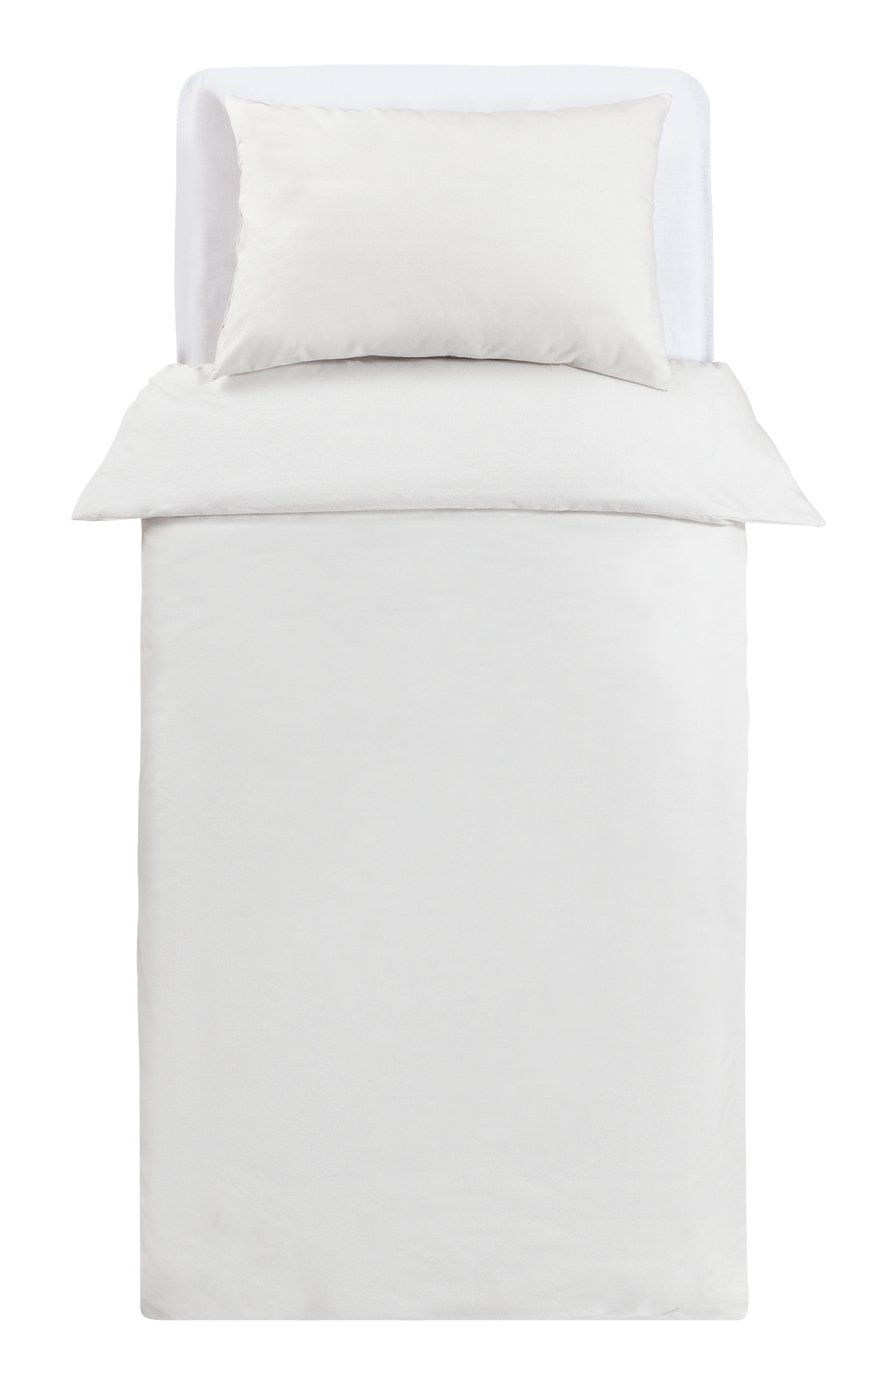 Argos Home Brushed Cotton Plain Cream Bedding Set - Single